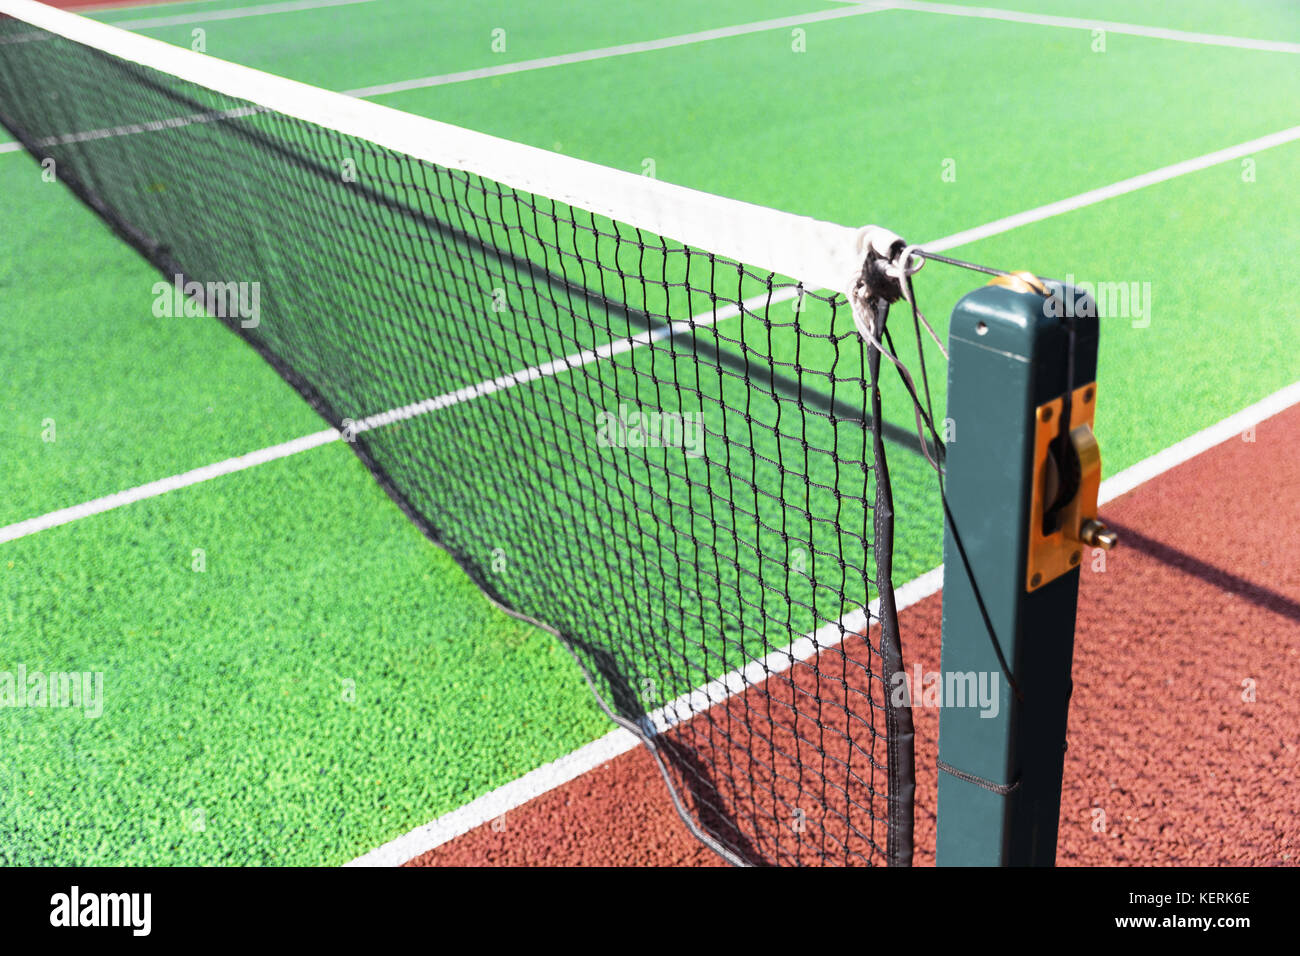 Hard court tennis net Stock Photo